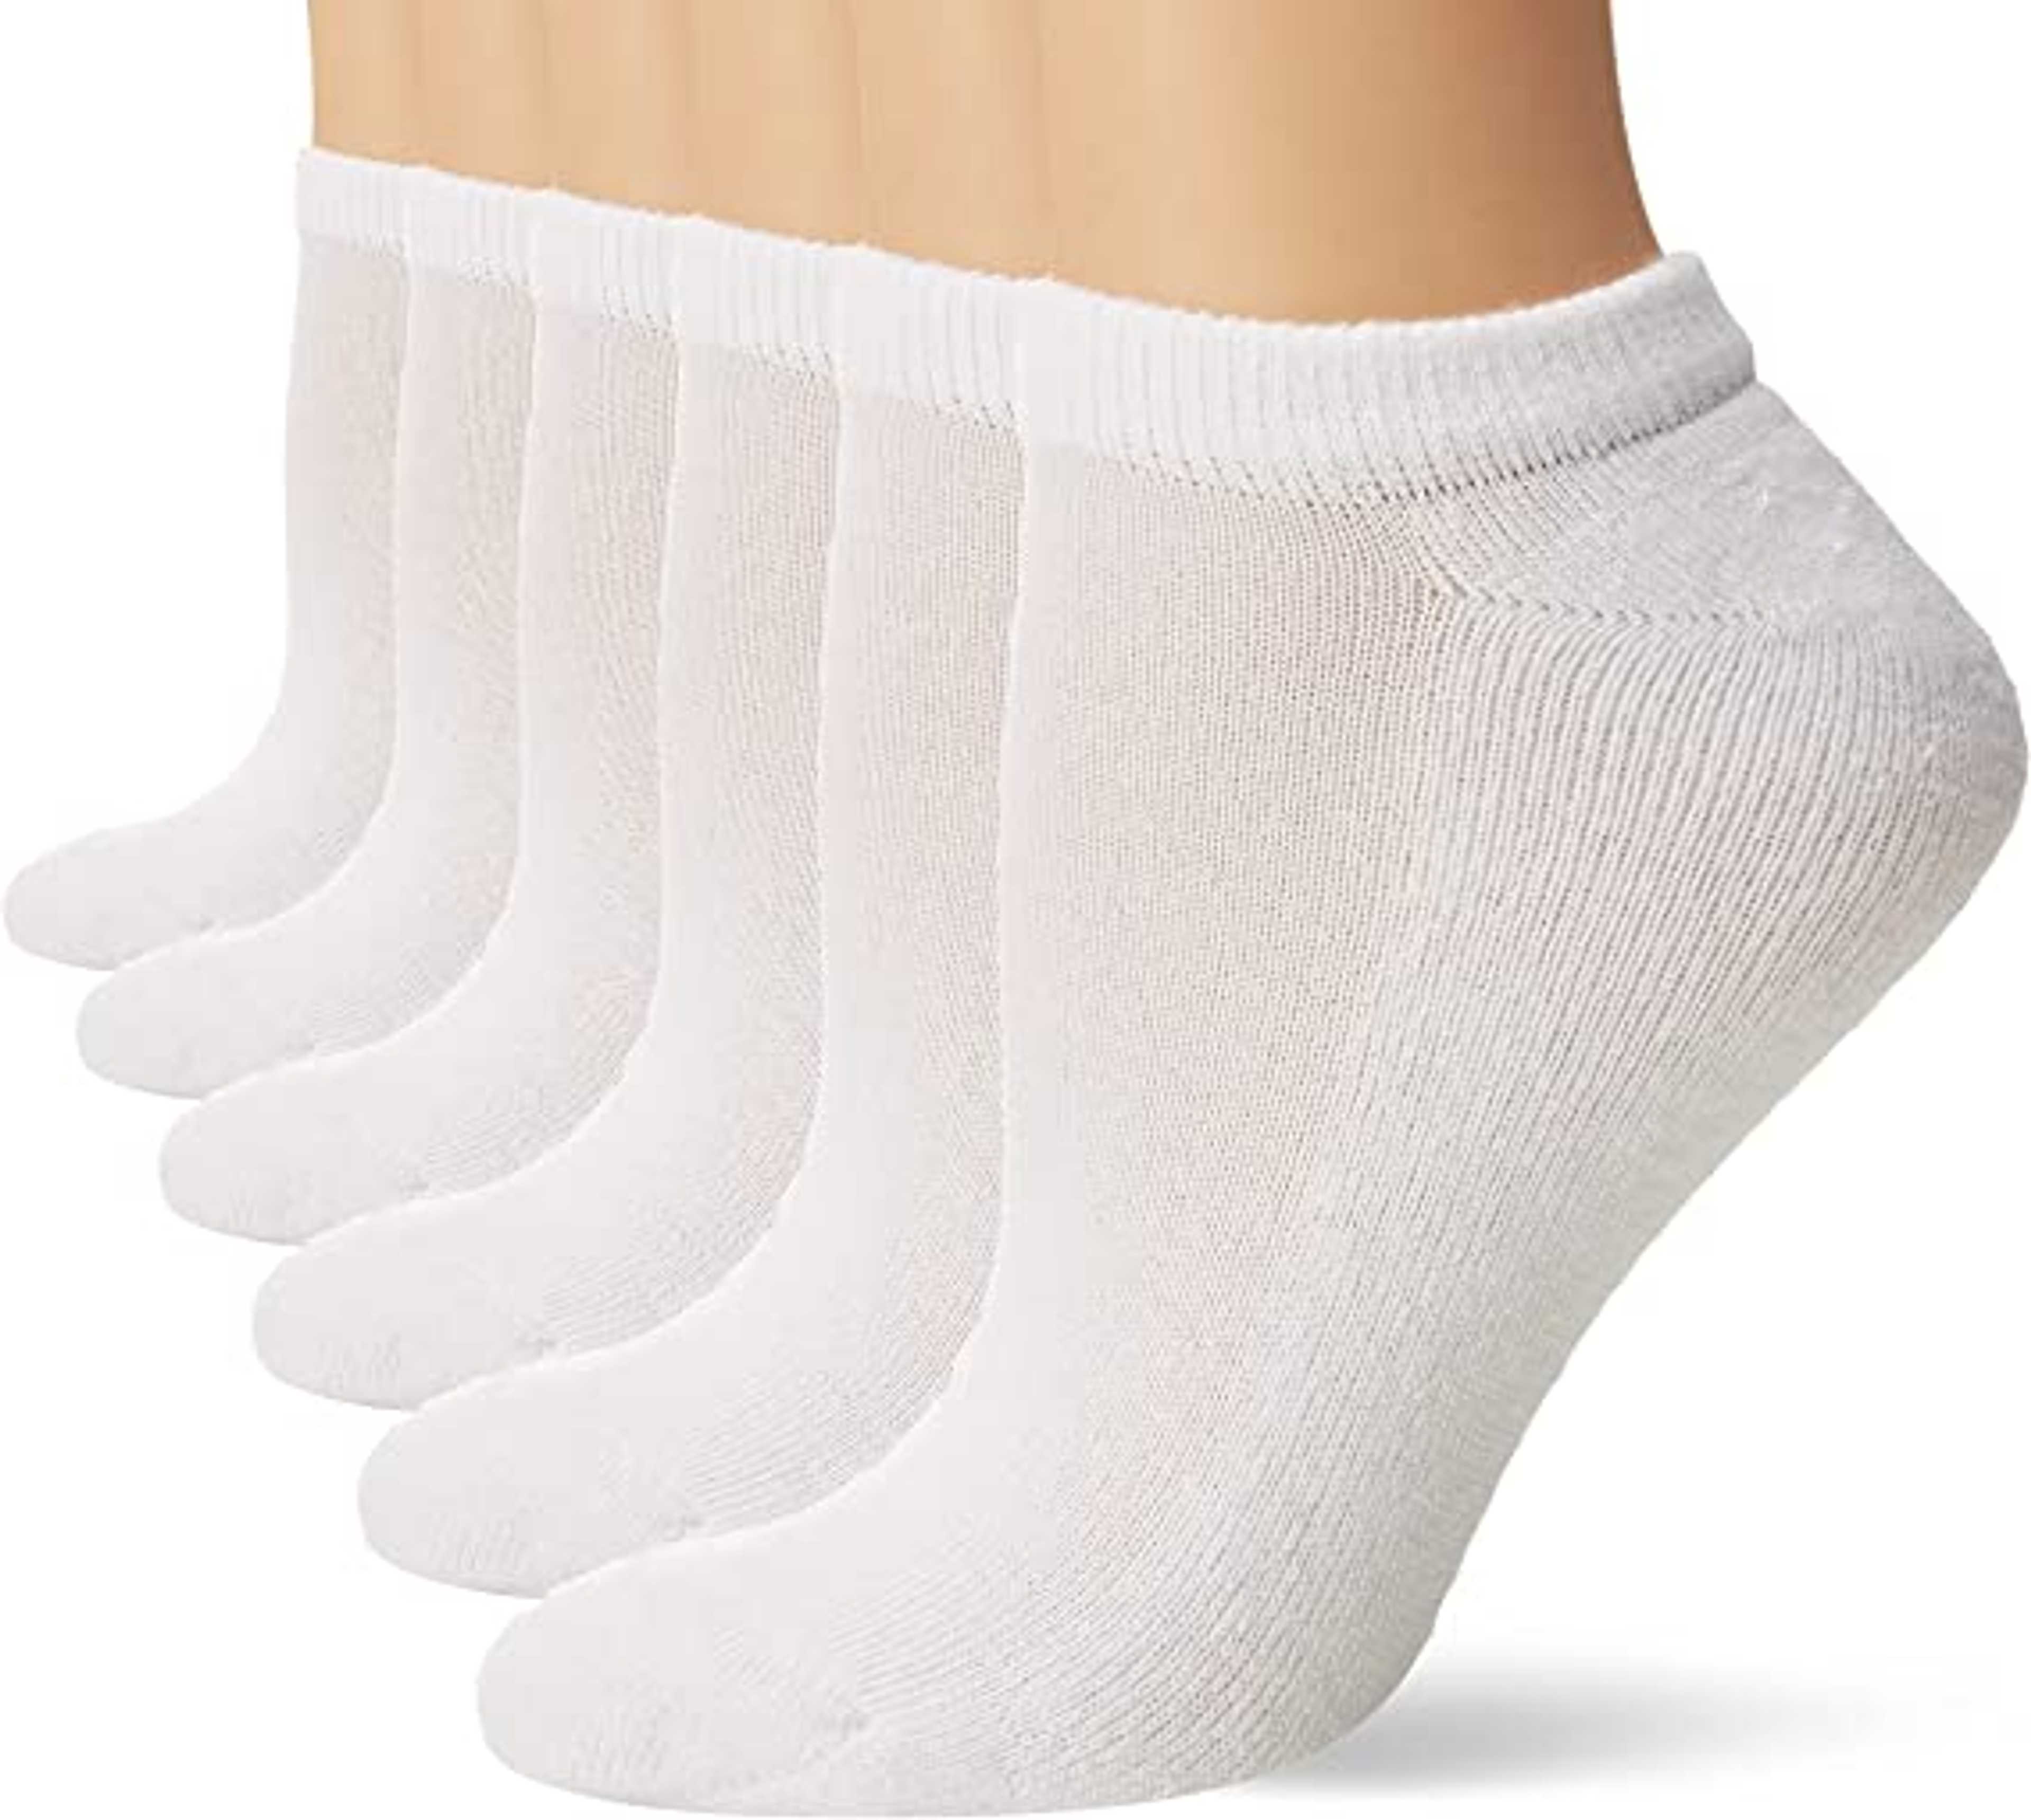 Code 6 Pairs Cotton Ankle Socks For Men Women  Cotton Ankle Socks For Men  No Show Low Cut Socks For Men  Business Casual Socks For Men - White